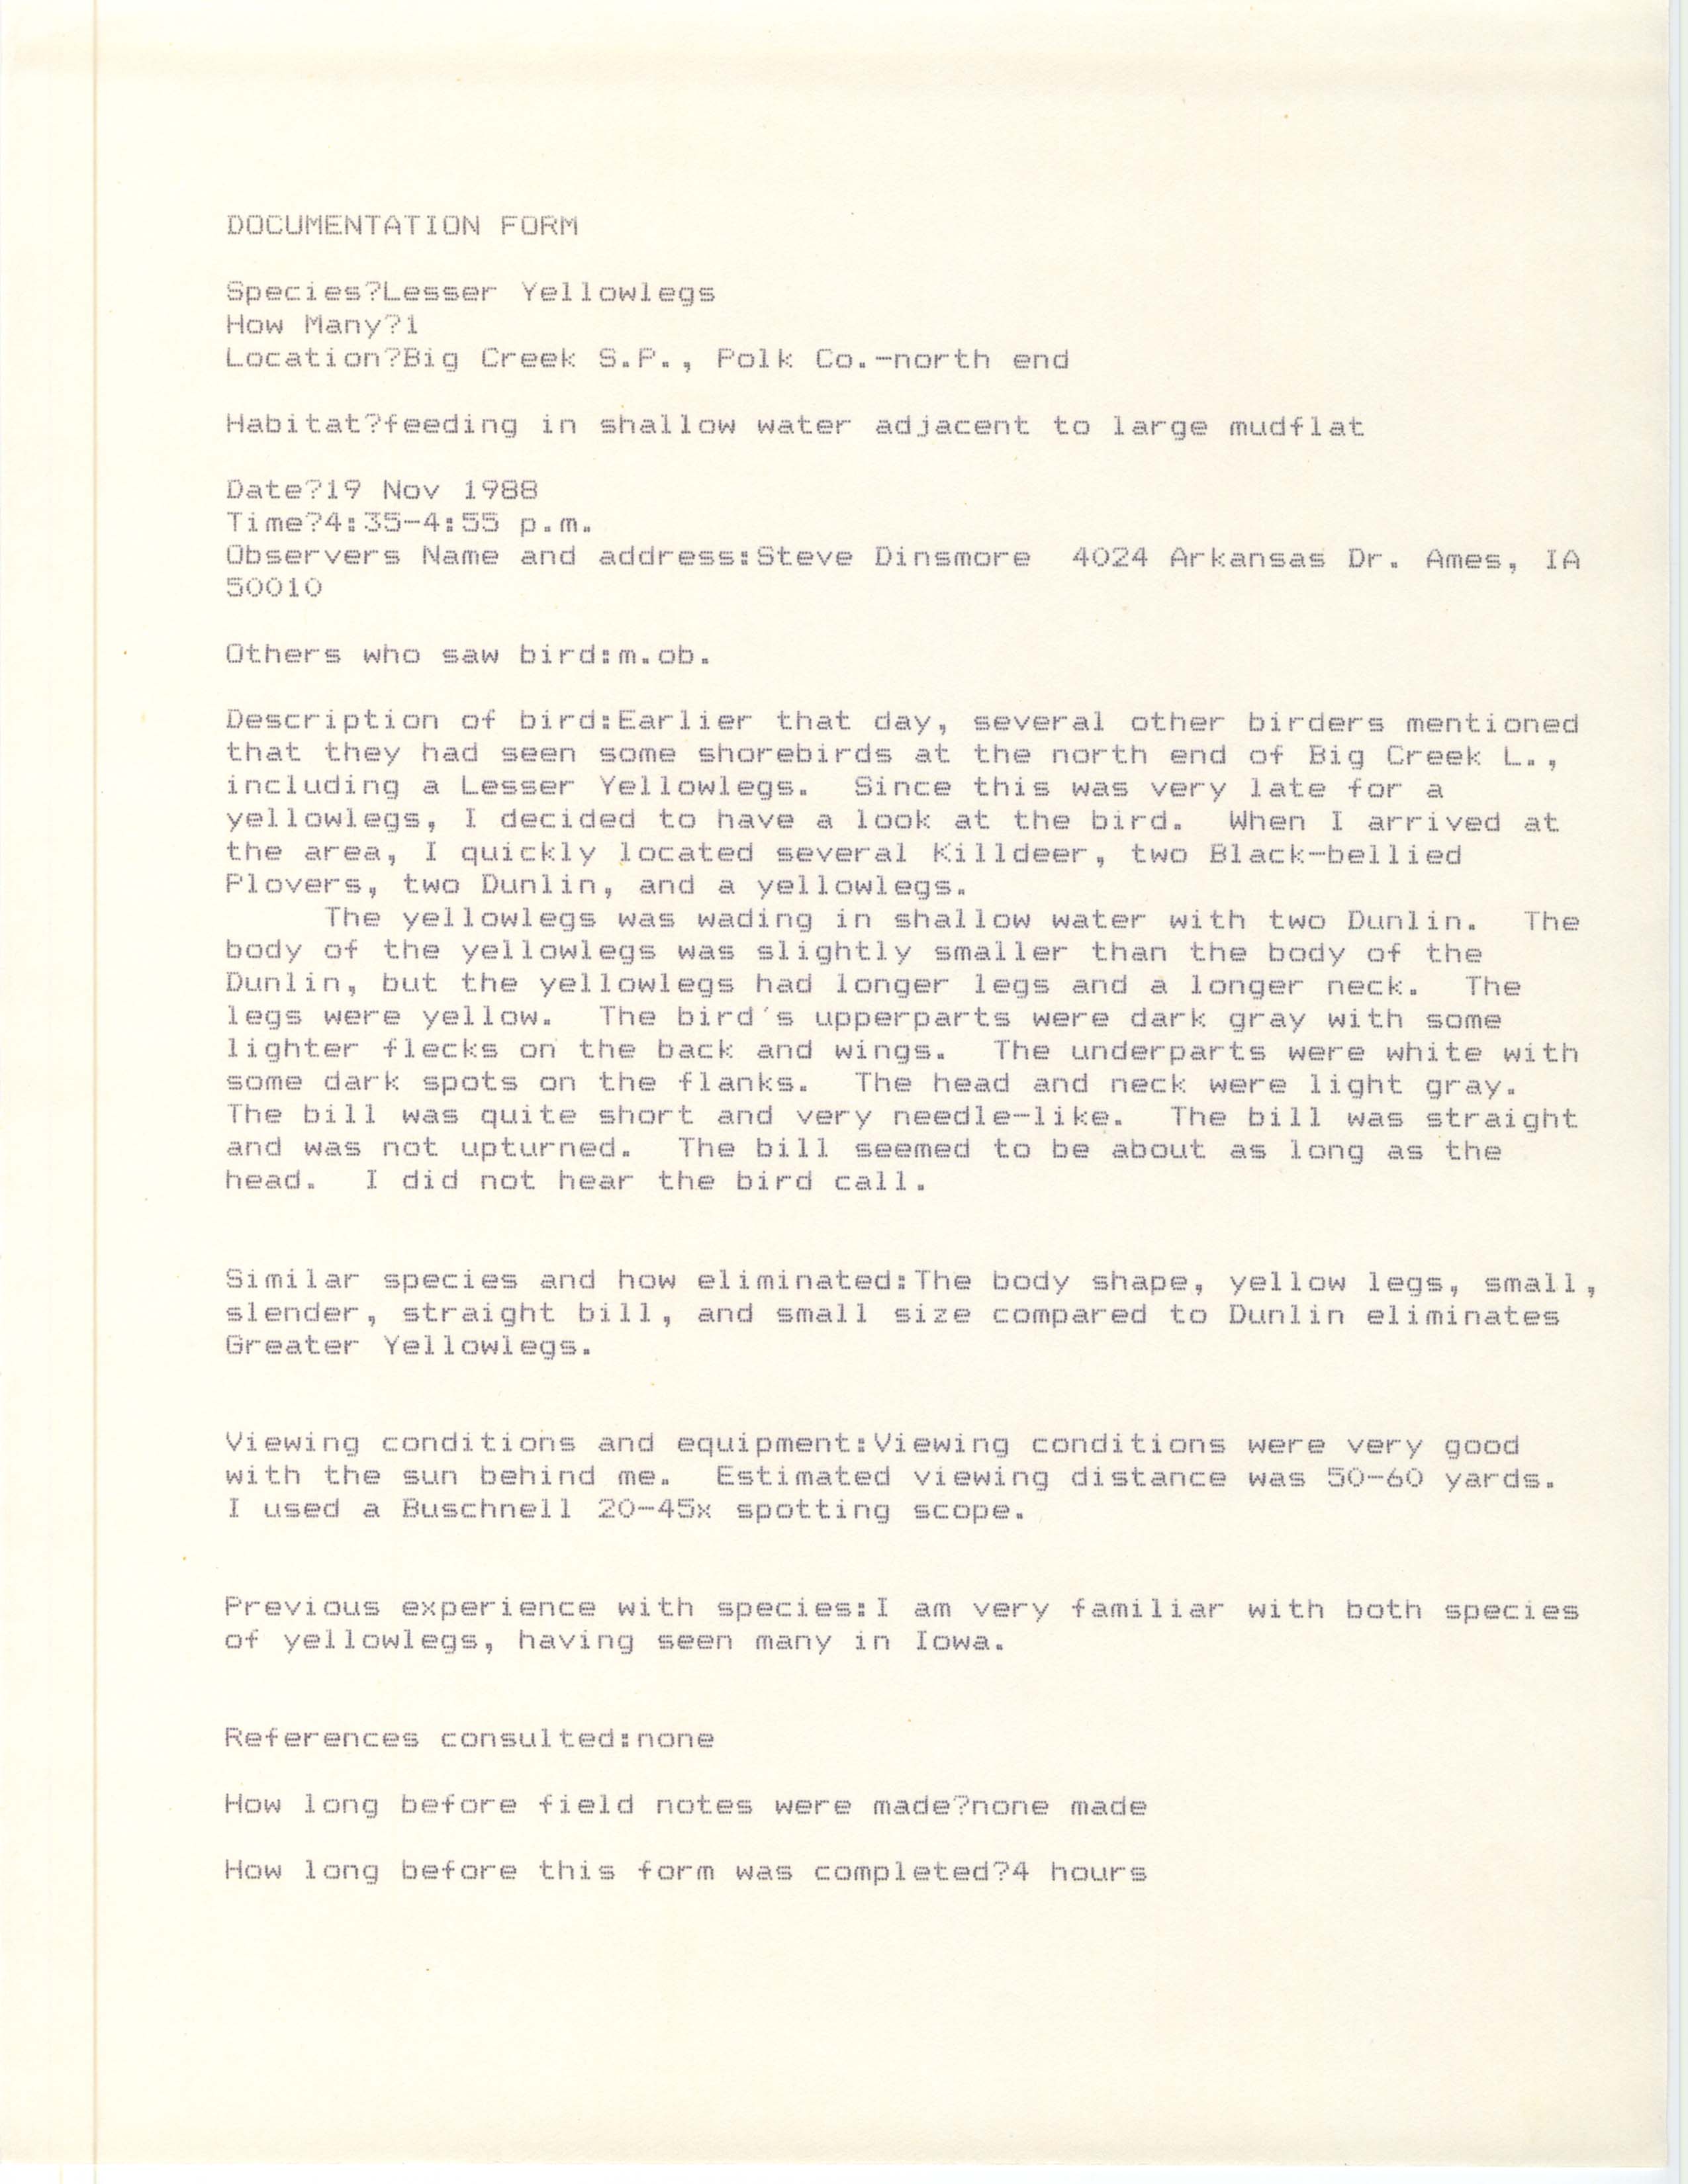 Rare bird documentation form for Lesser Yellowlegs at Big Creek State Park, 1988